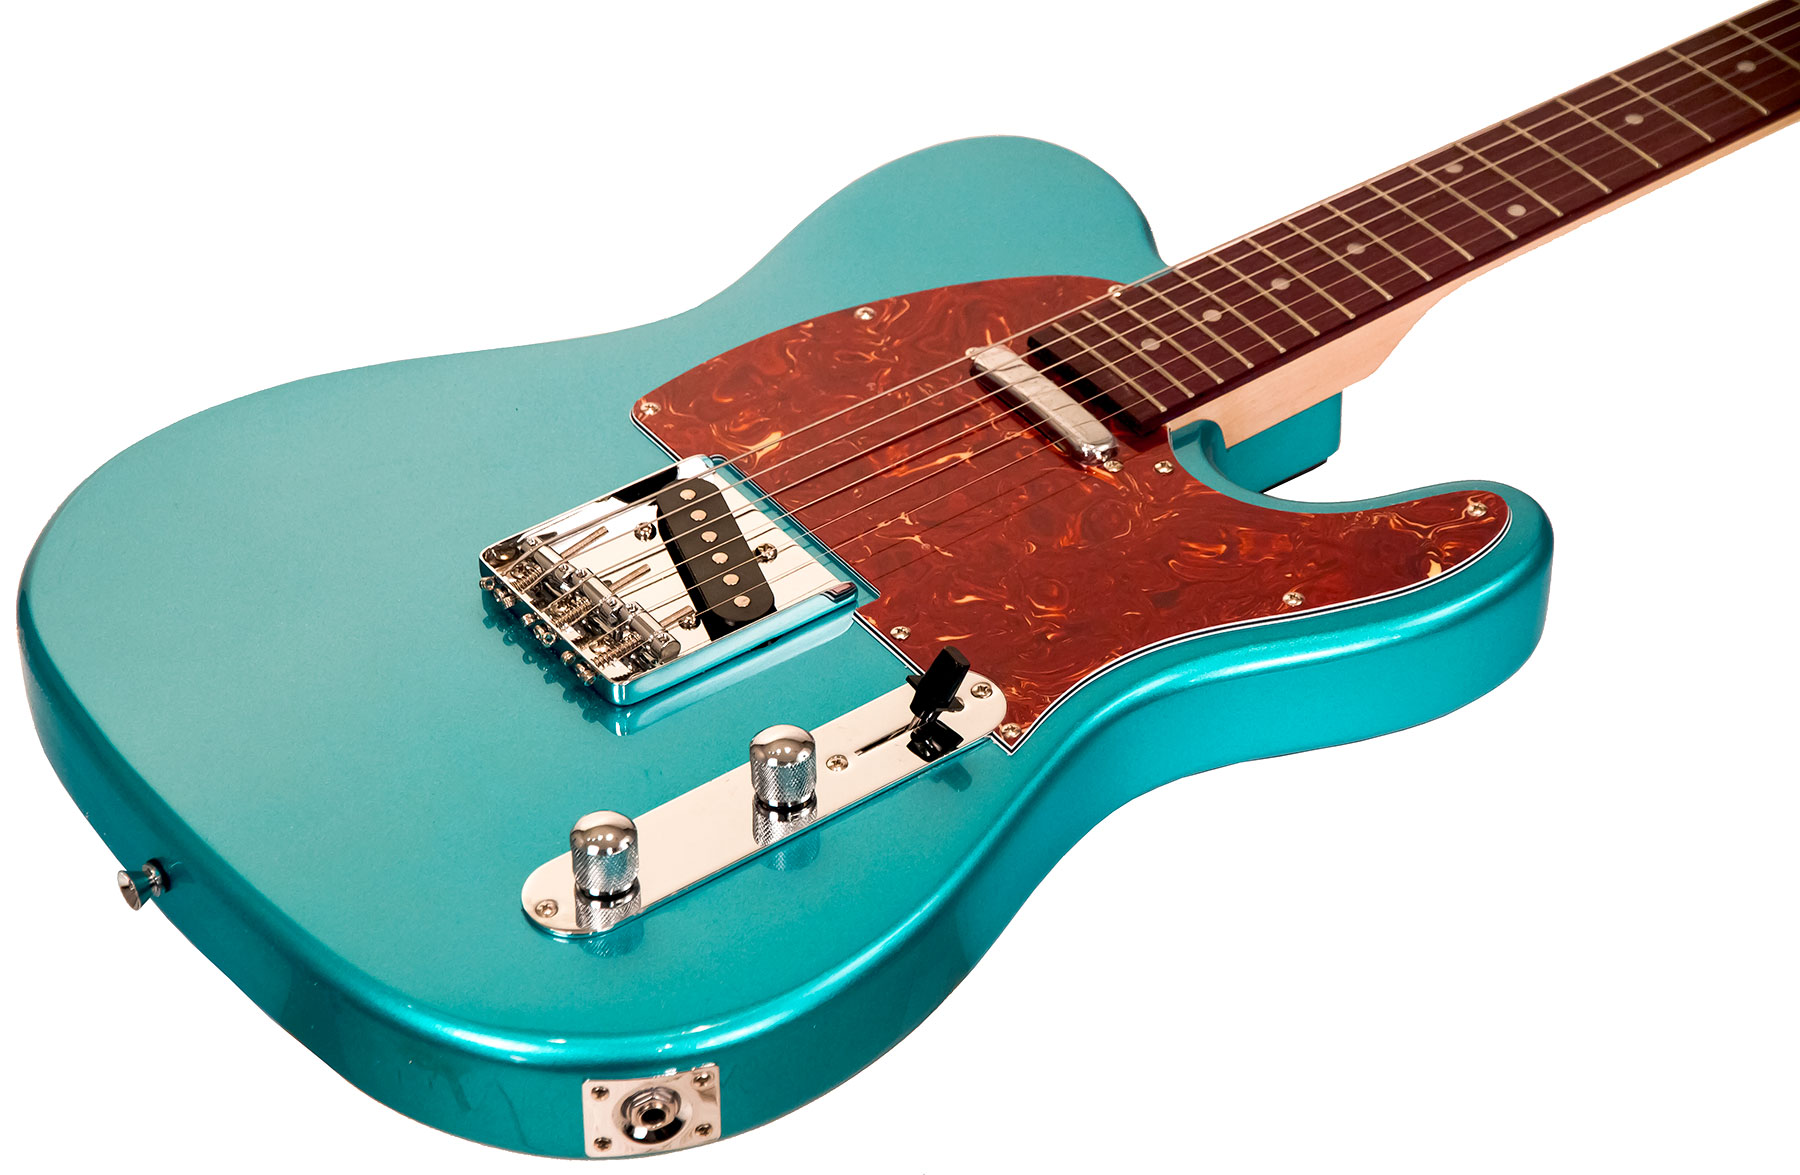 Eastone Tl70 Ss Ht Pur - Metallic Light Blue - Tel shape electric guitar - Variation 1